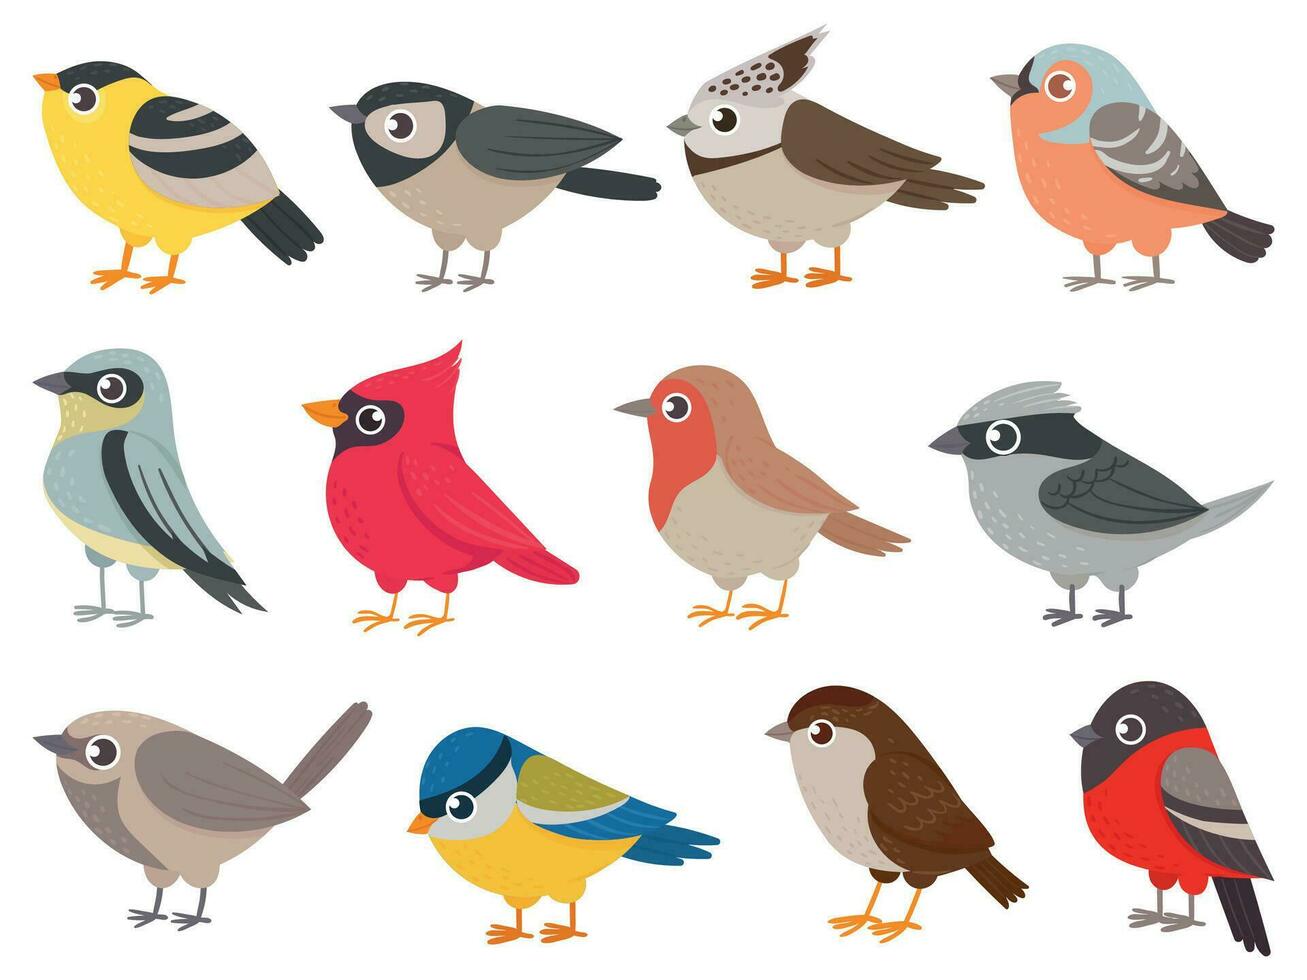 linda aves. mano dibujado pequeño vistoso aves, animales caracteres para impresión tarjeta, jardín decoración. elementos para infantil póster vector conjunto